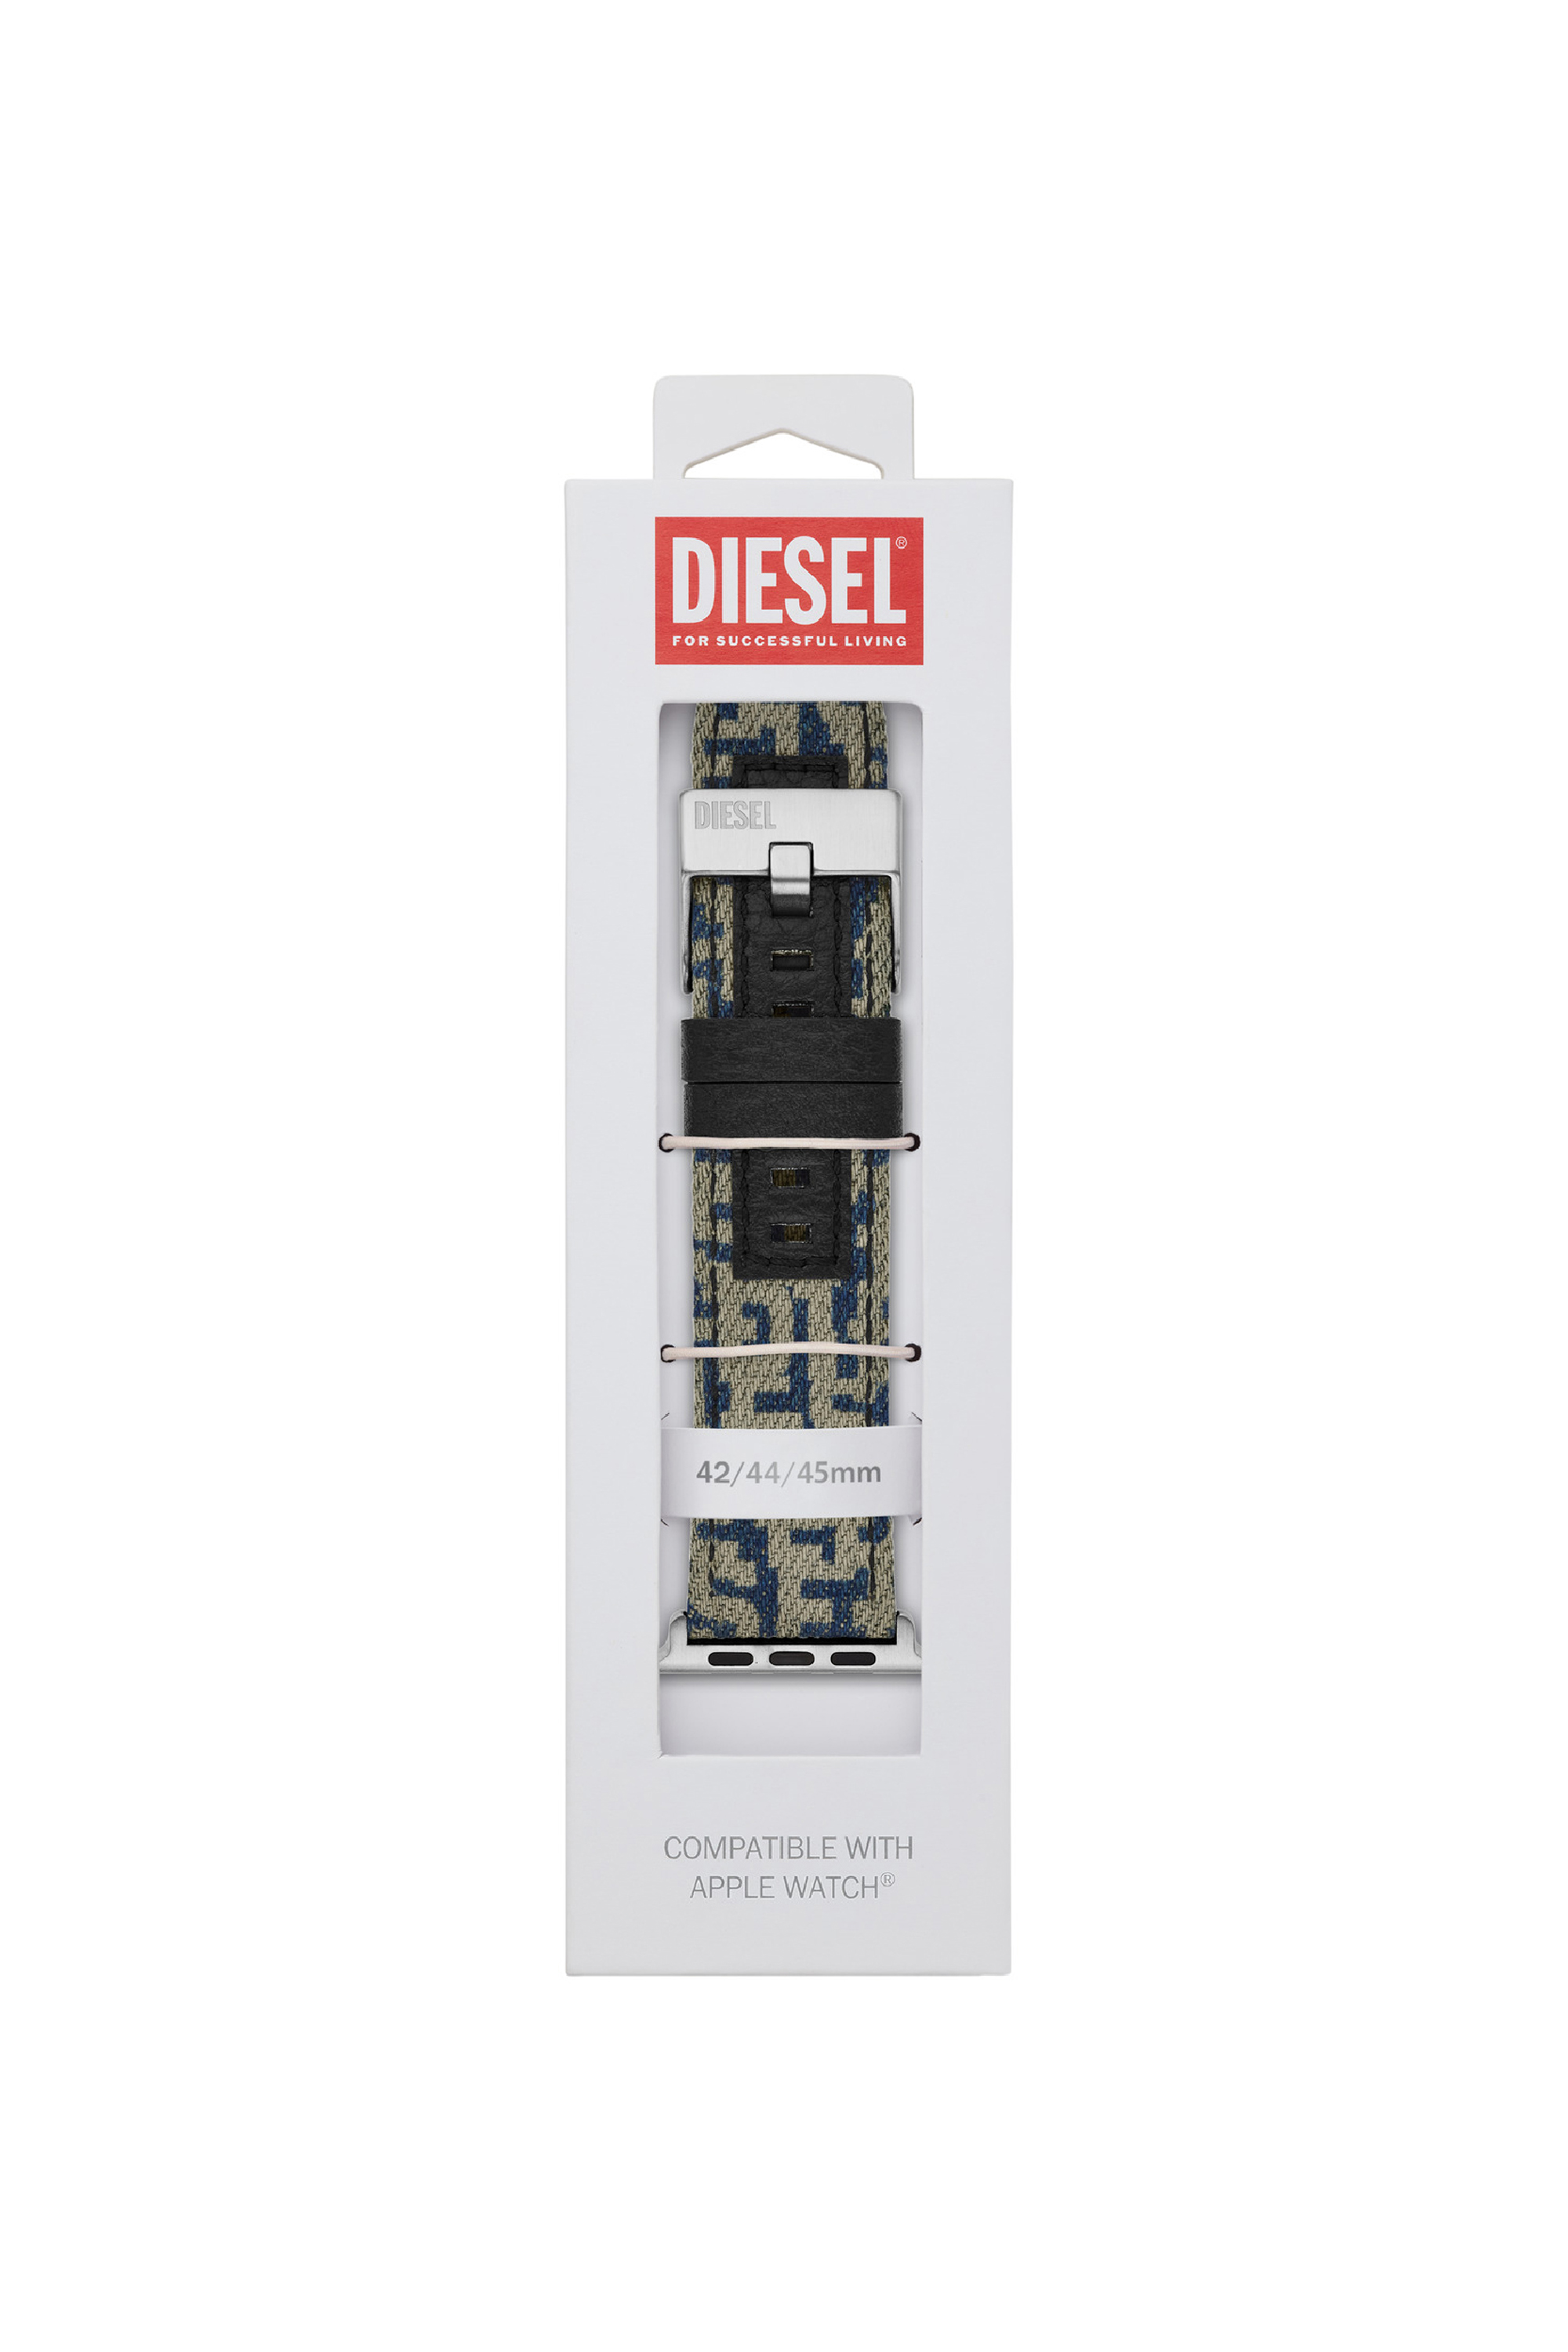 Diesel - DSS0013, Unisex Blue denim Band for Apple watch®, 42/44/45mm in Blue - Image 2